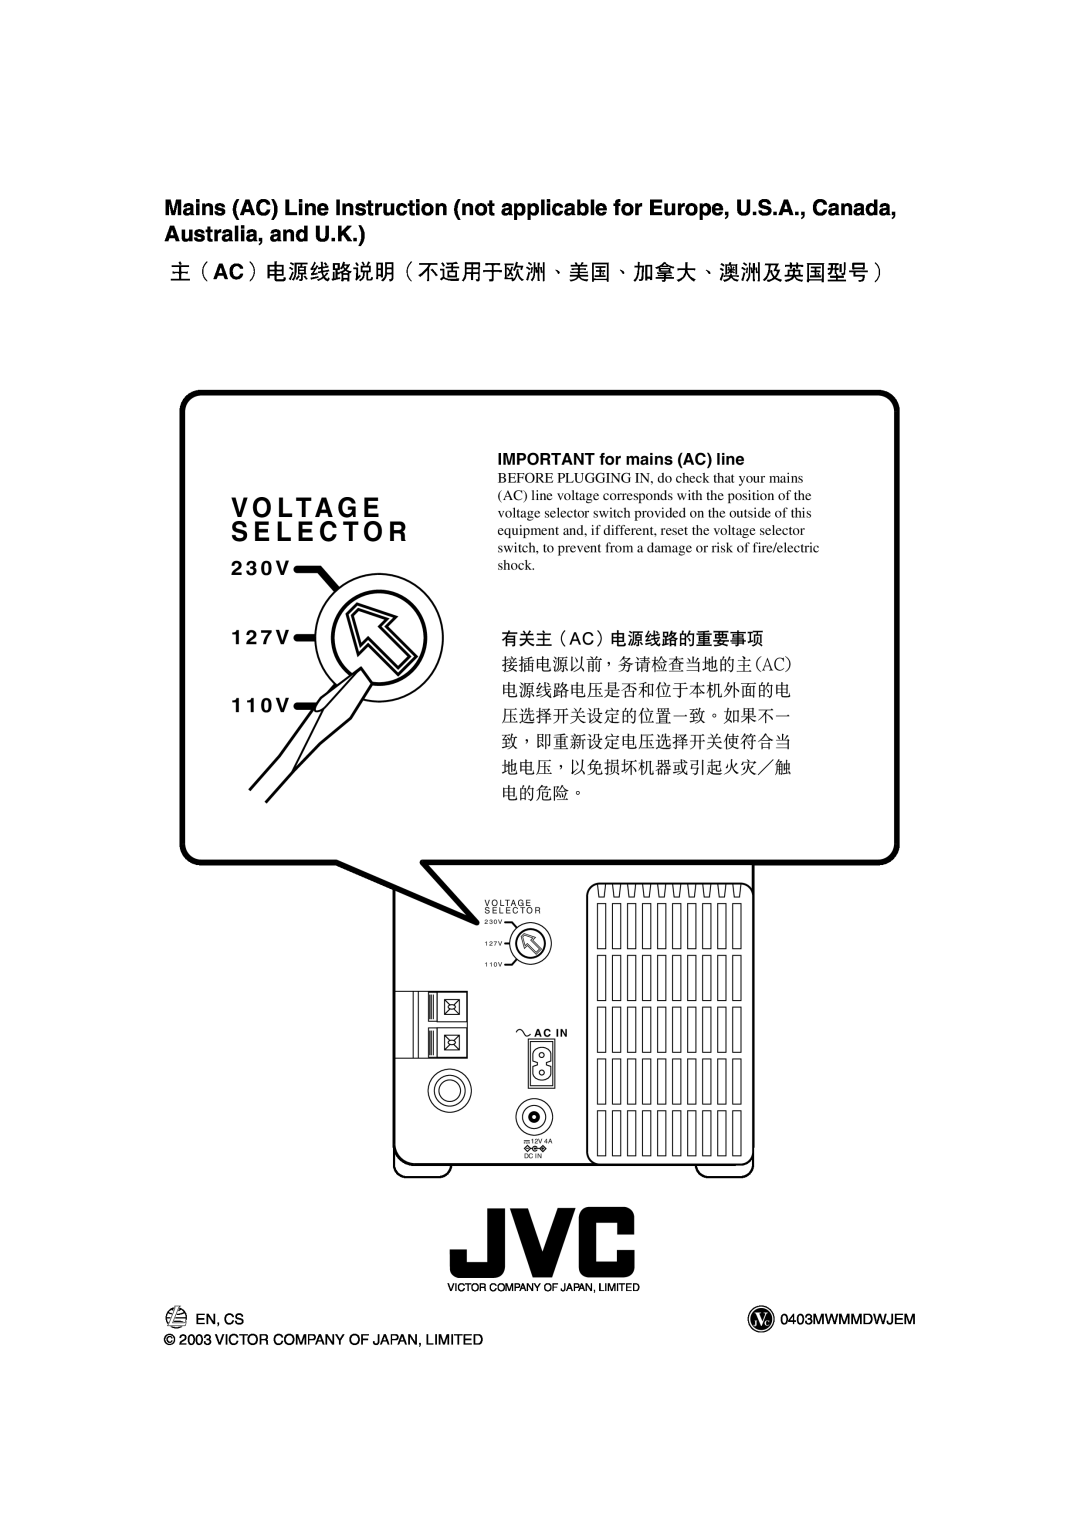 JVC UX-H33 manual V O L T A G E S E L E C T O R, IMPORTANT for mains AC line 